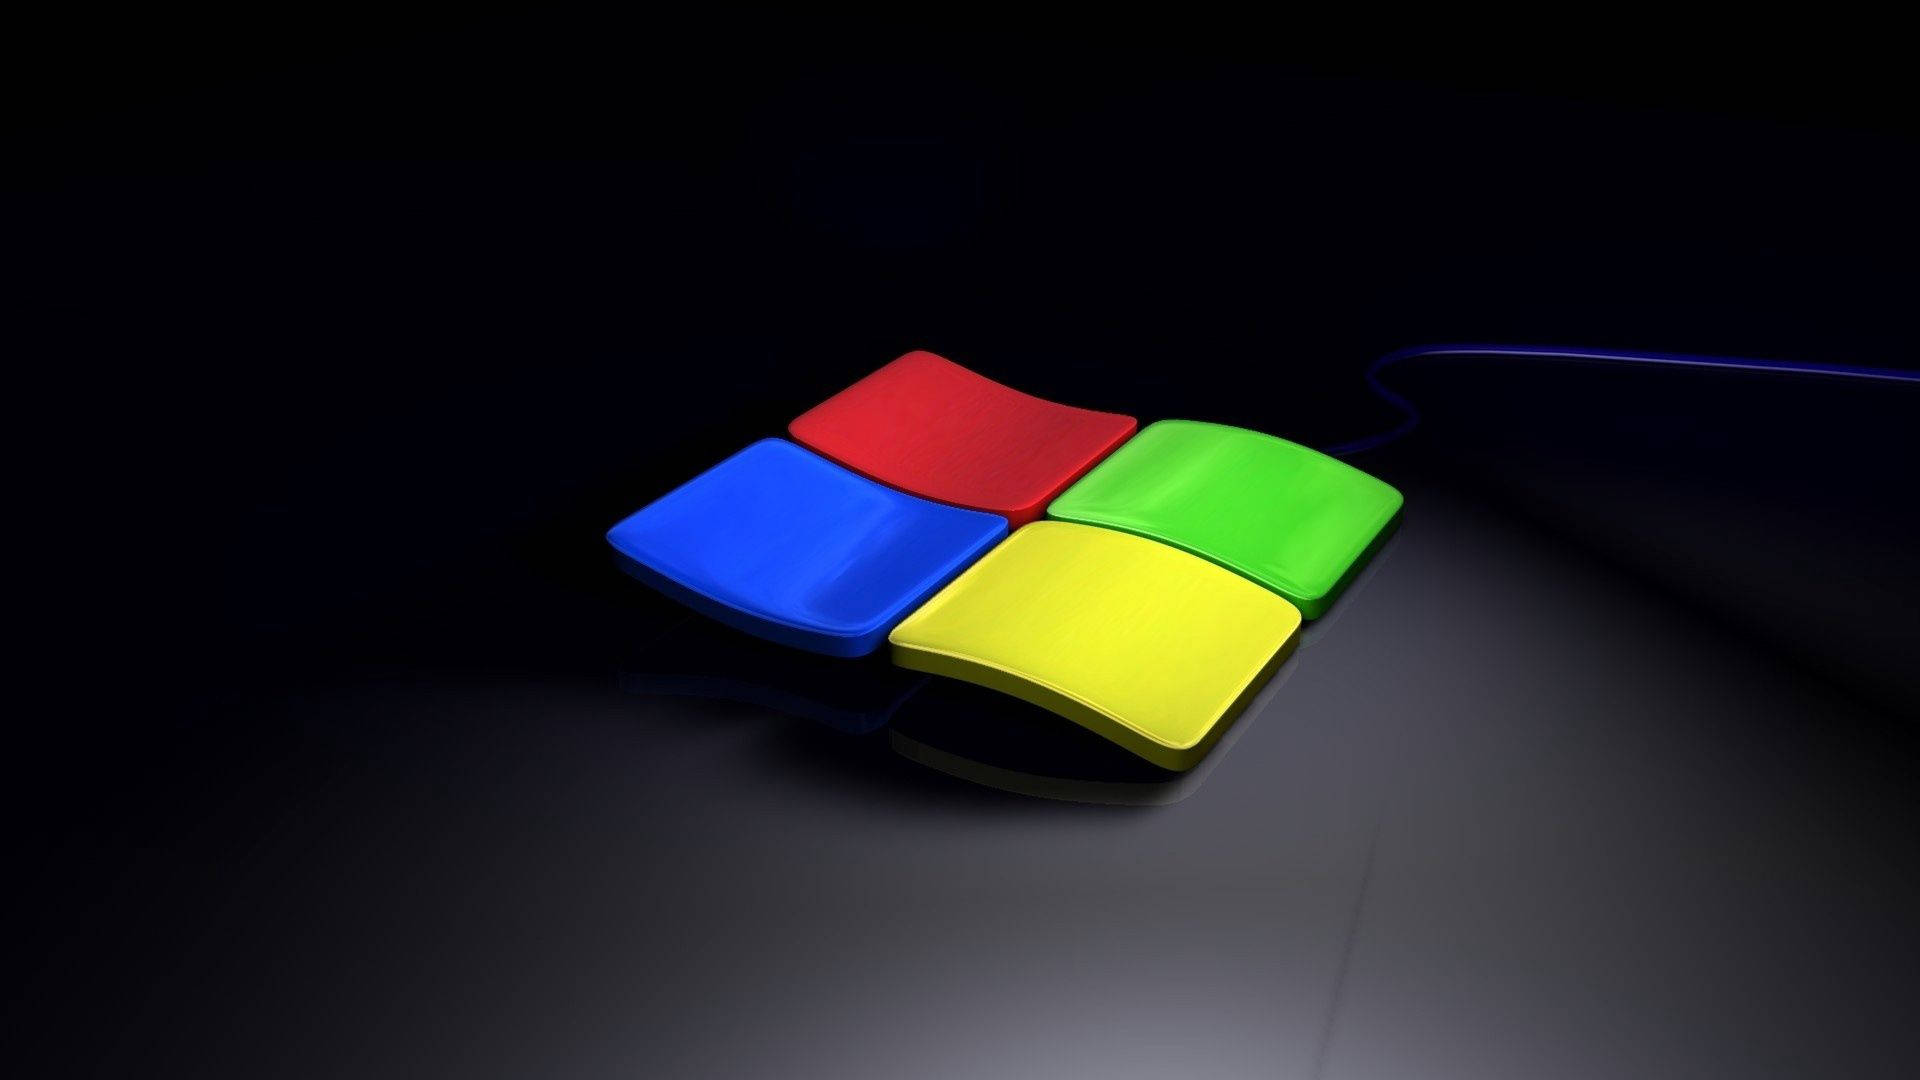 Black Windows 10 Hd 3d Logo Wallpaper